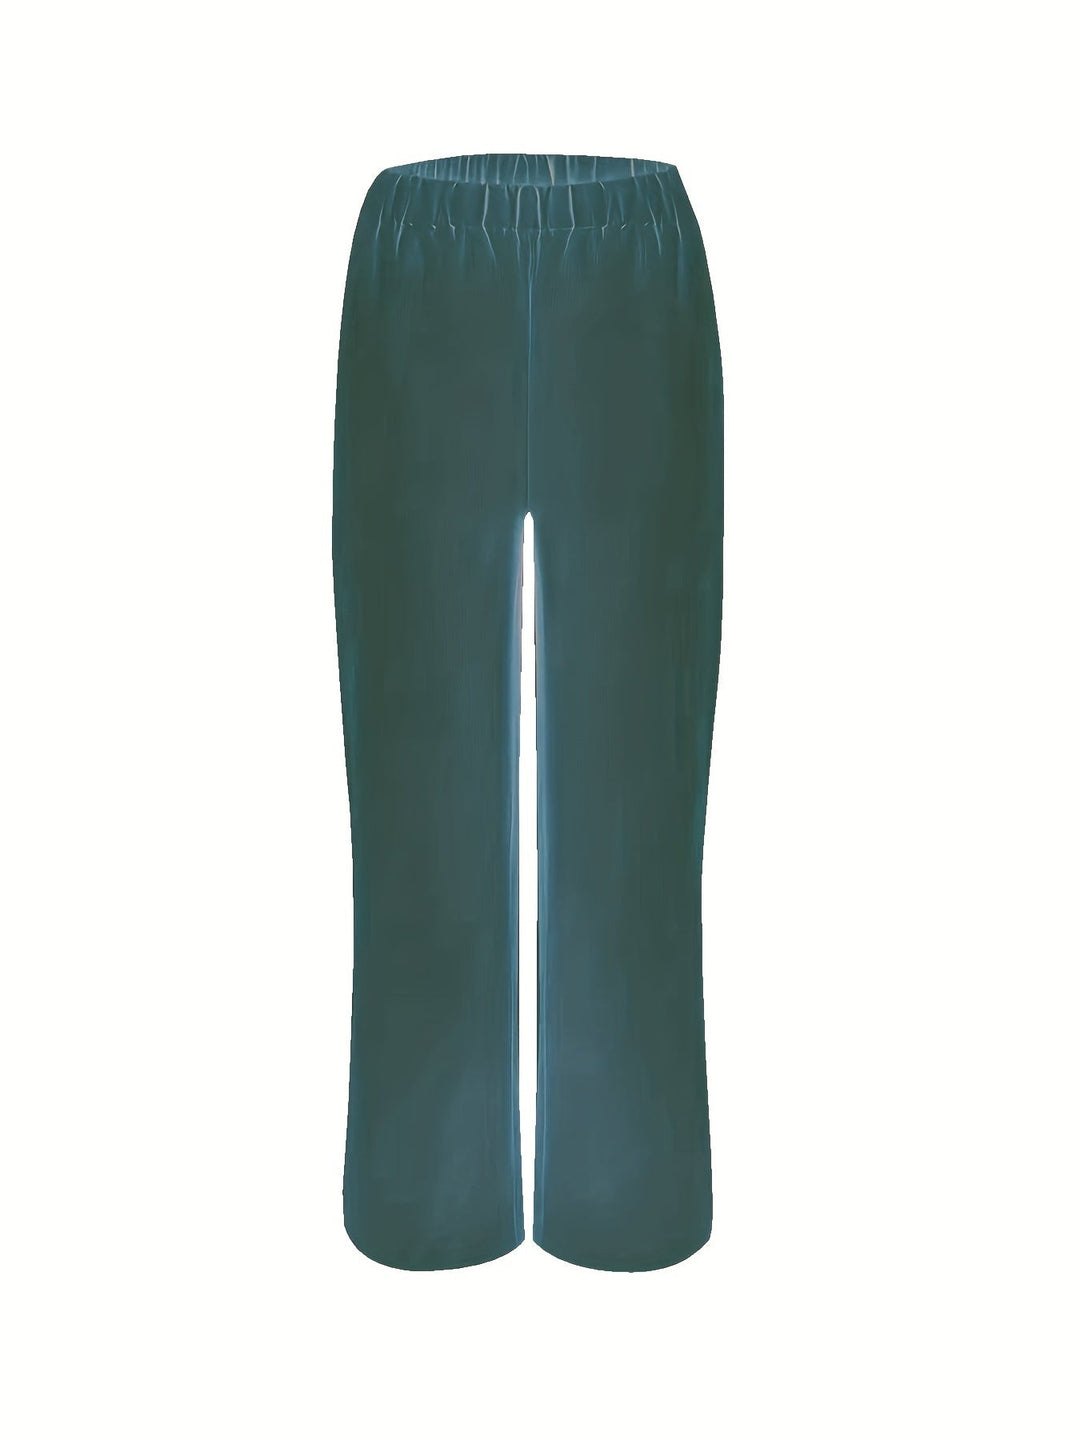 Lightweight Breathable Fabric 2Pcs Sleeveless Top & Pants S-XXL 